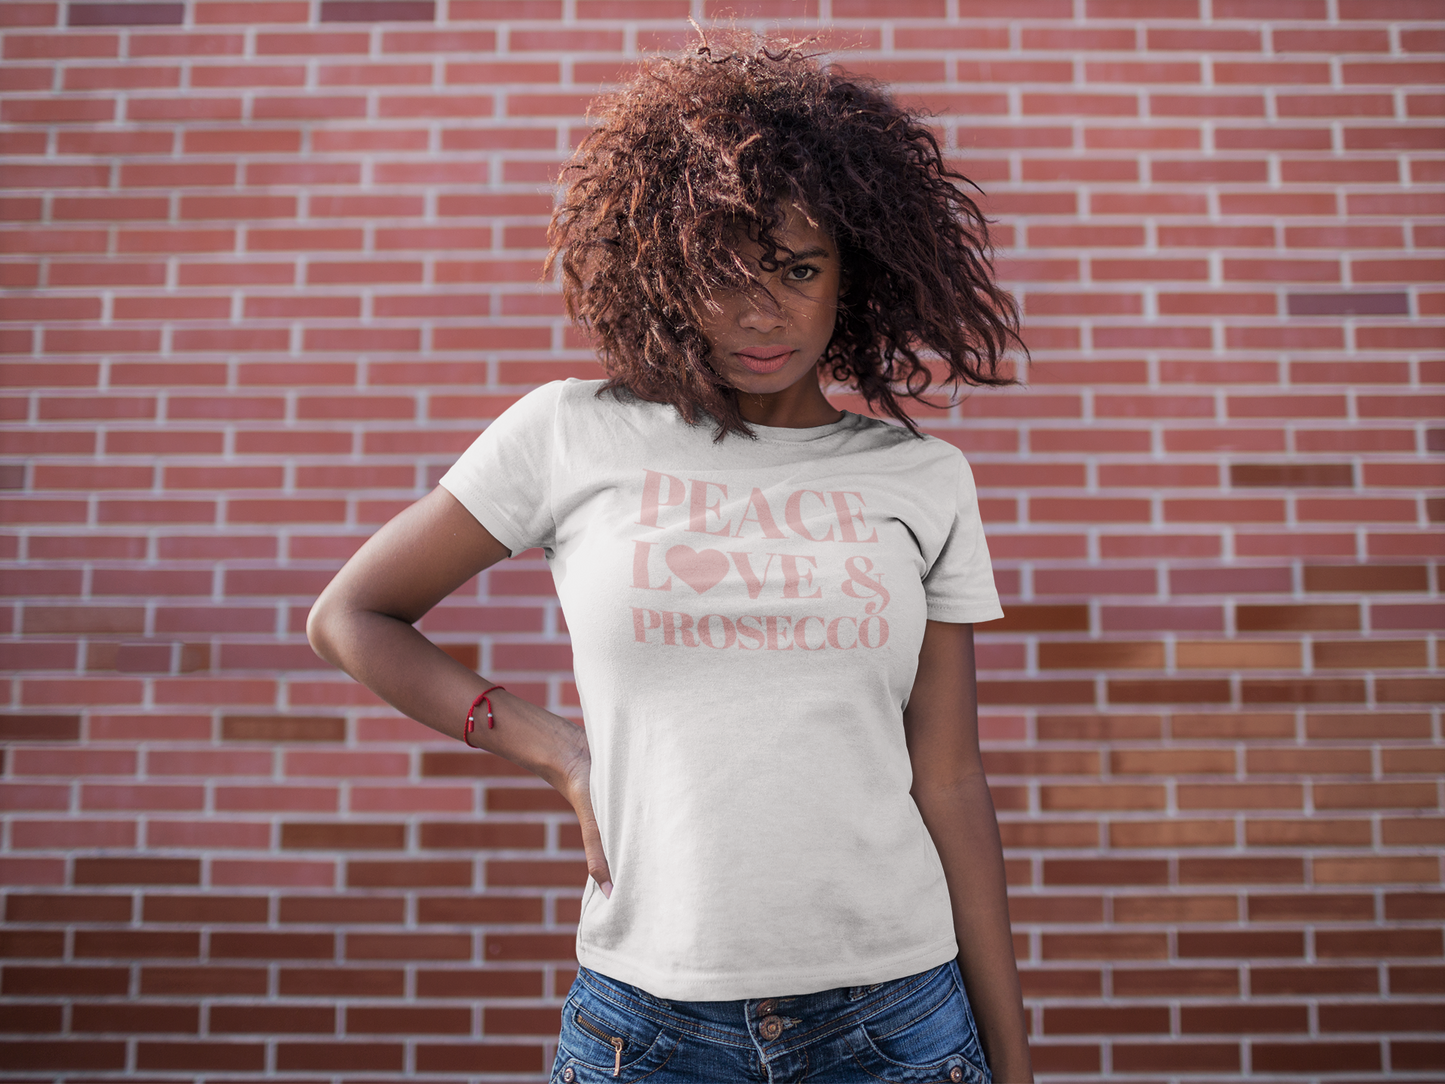 Peace, Love & Prosecco Short-Sleeve Unisex T-Shirt